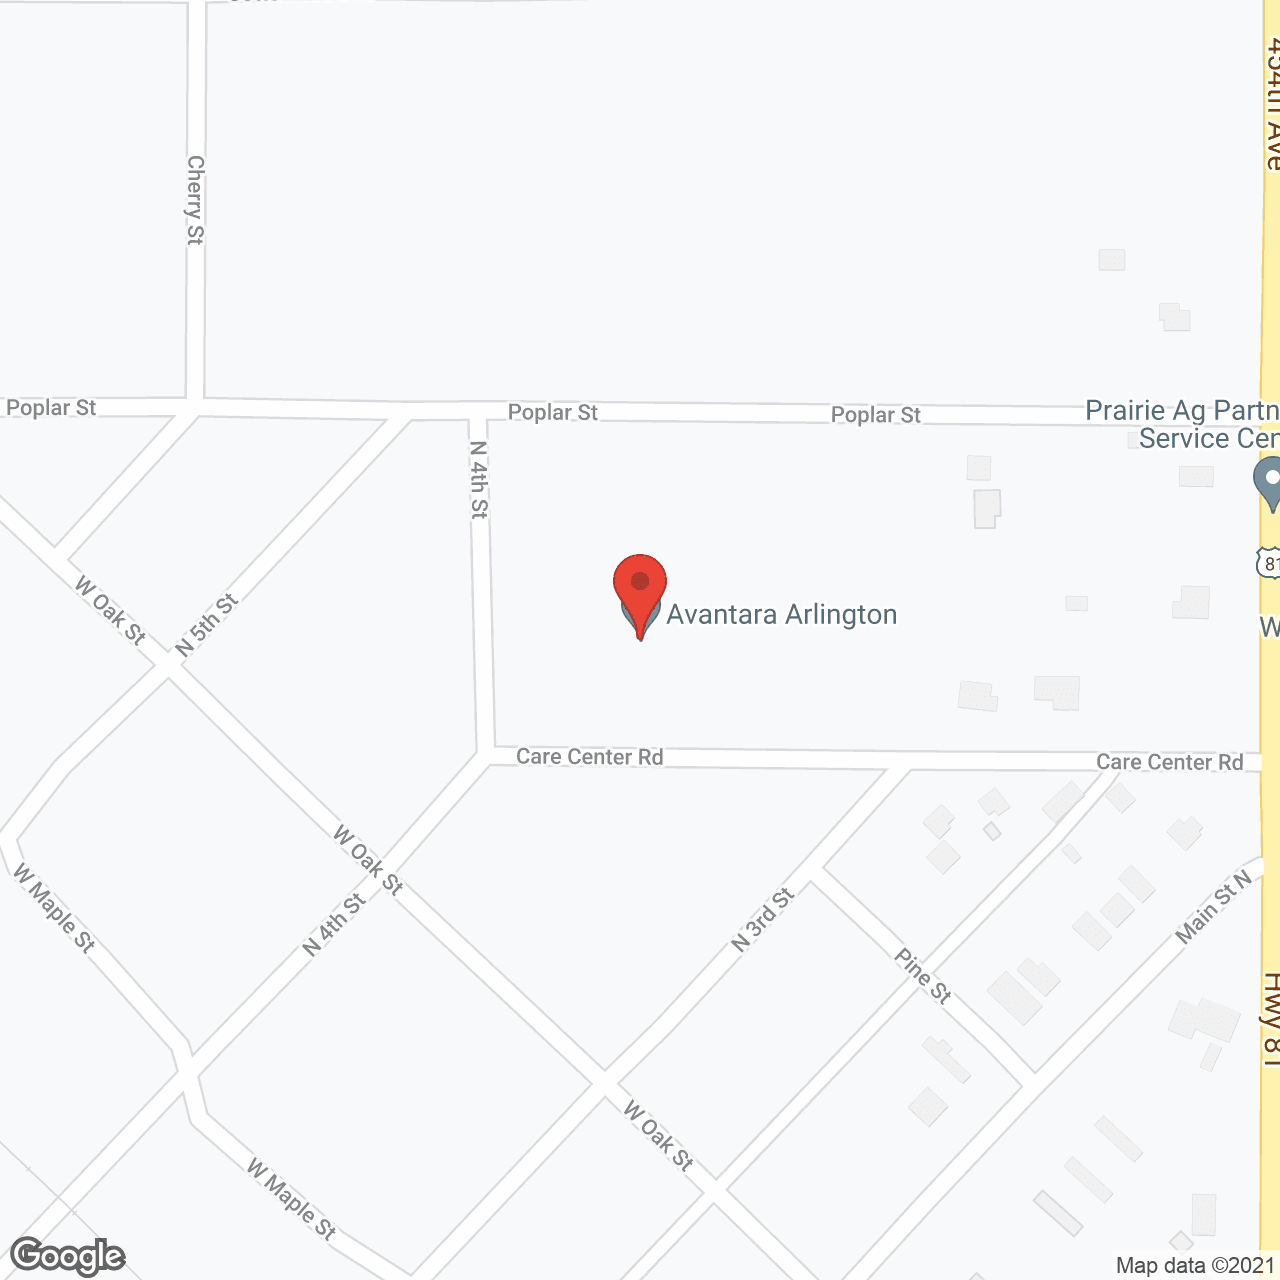 Golden LivingCenter - Arlington in google map